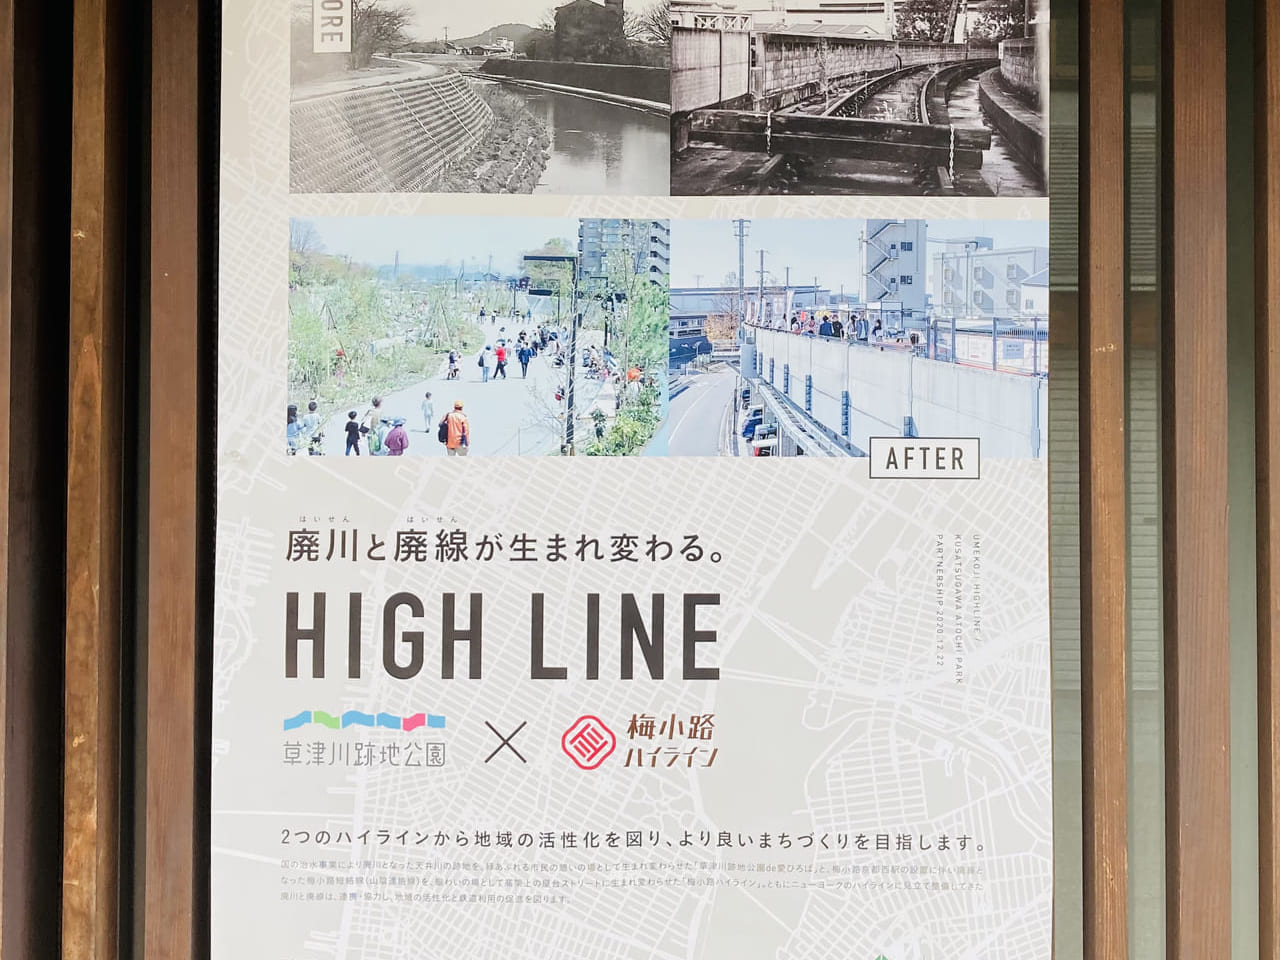 high line